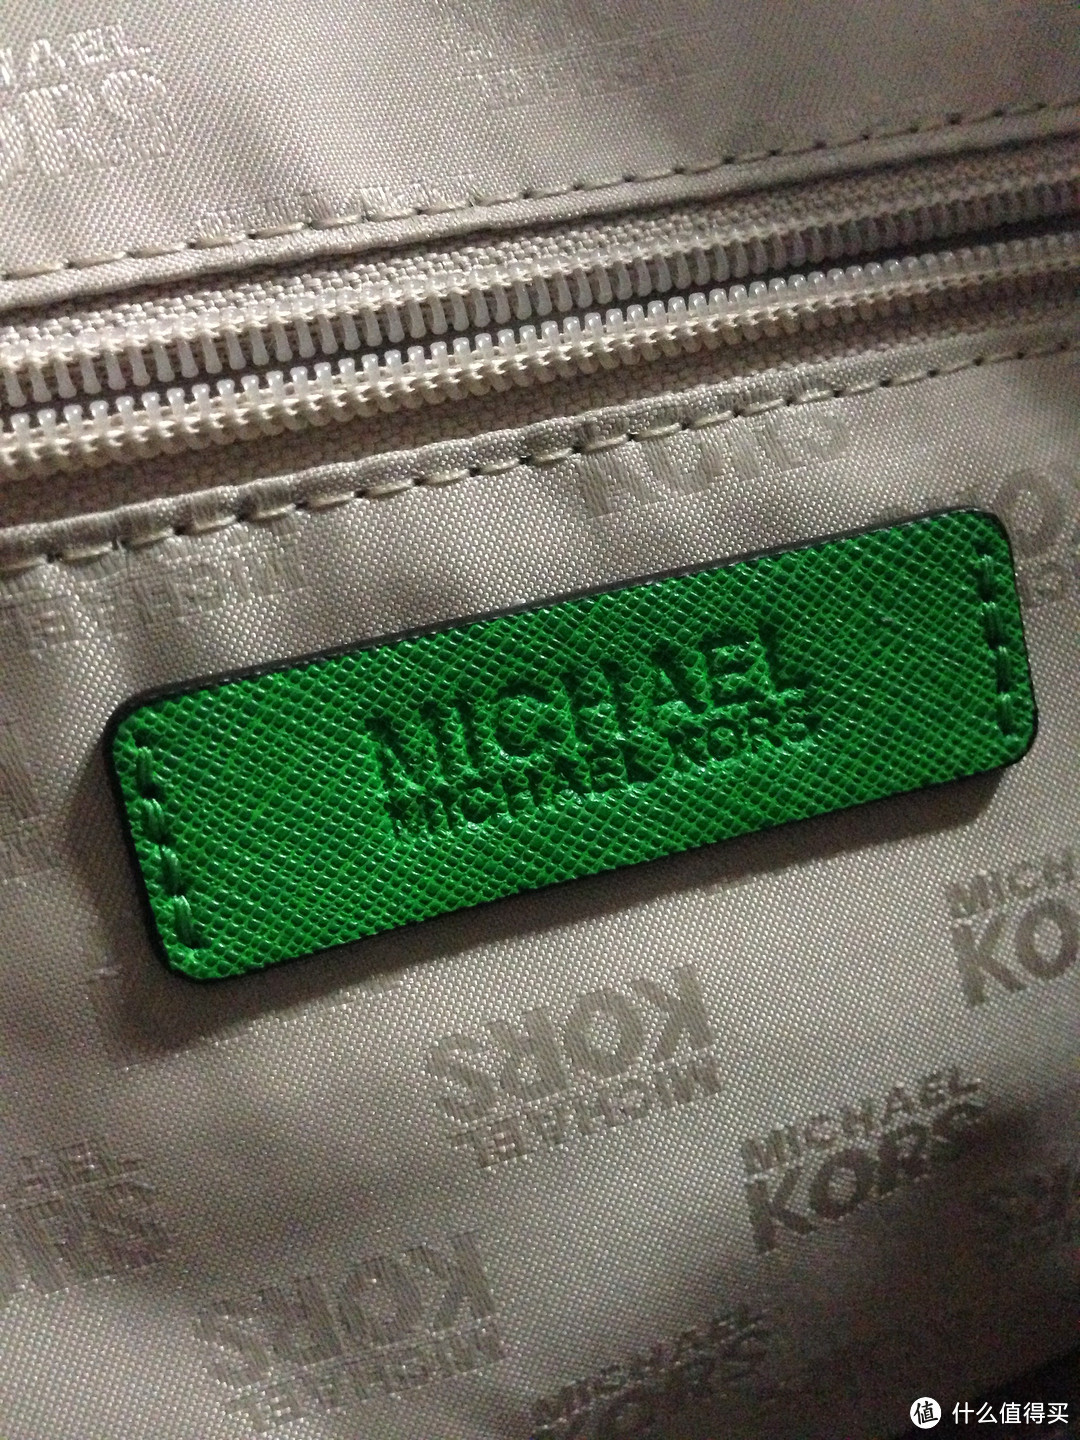 Michael Kors 绿色中号贝壳包& Tory Burch 长款十字纹拉链钱包